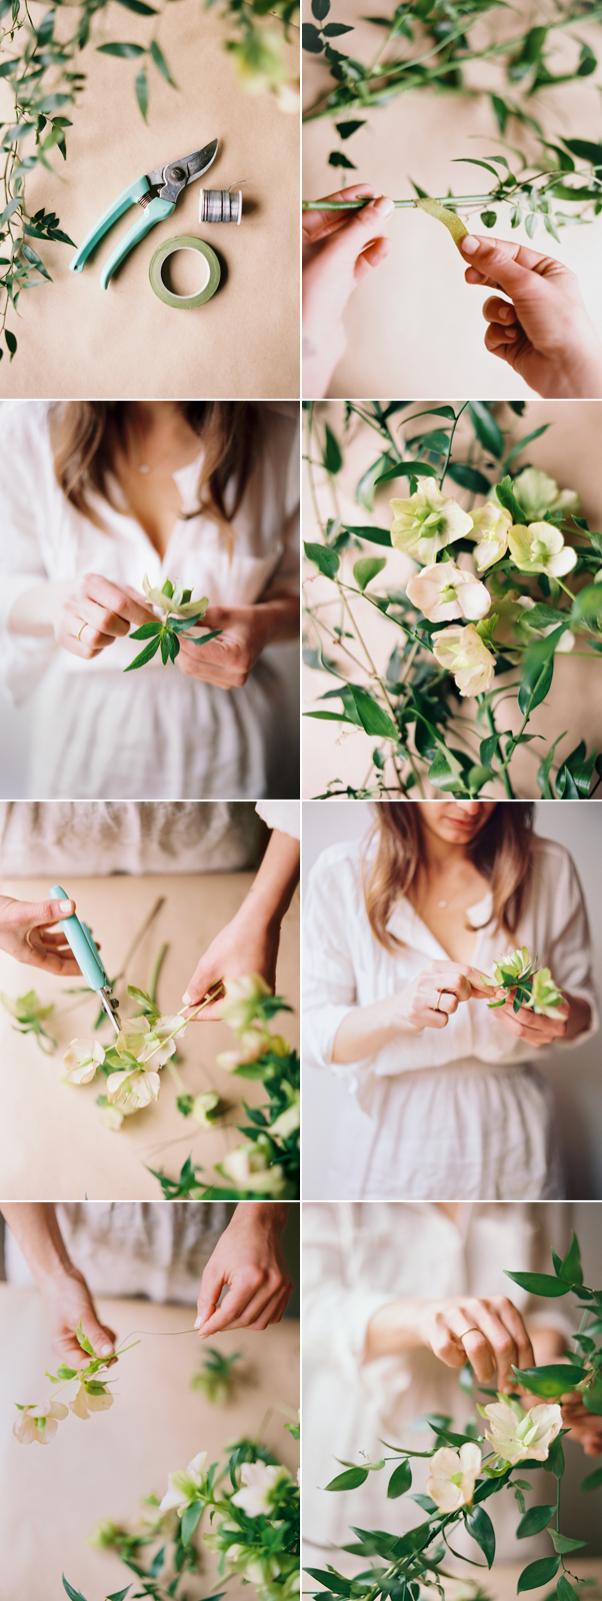 diy-spring-wedding-garland-tutorial-steps